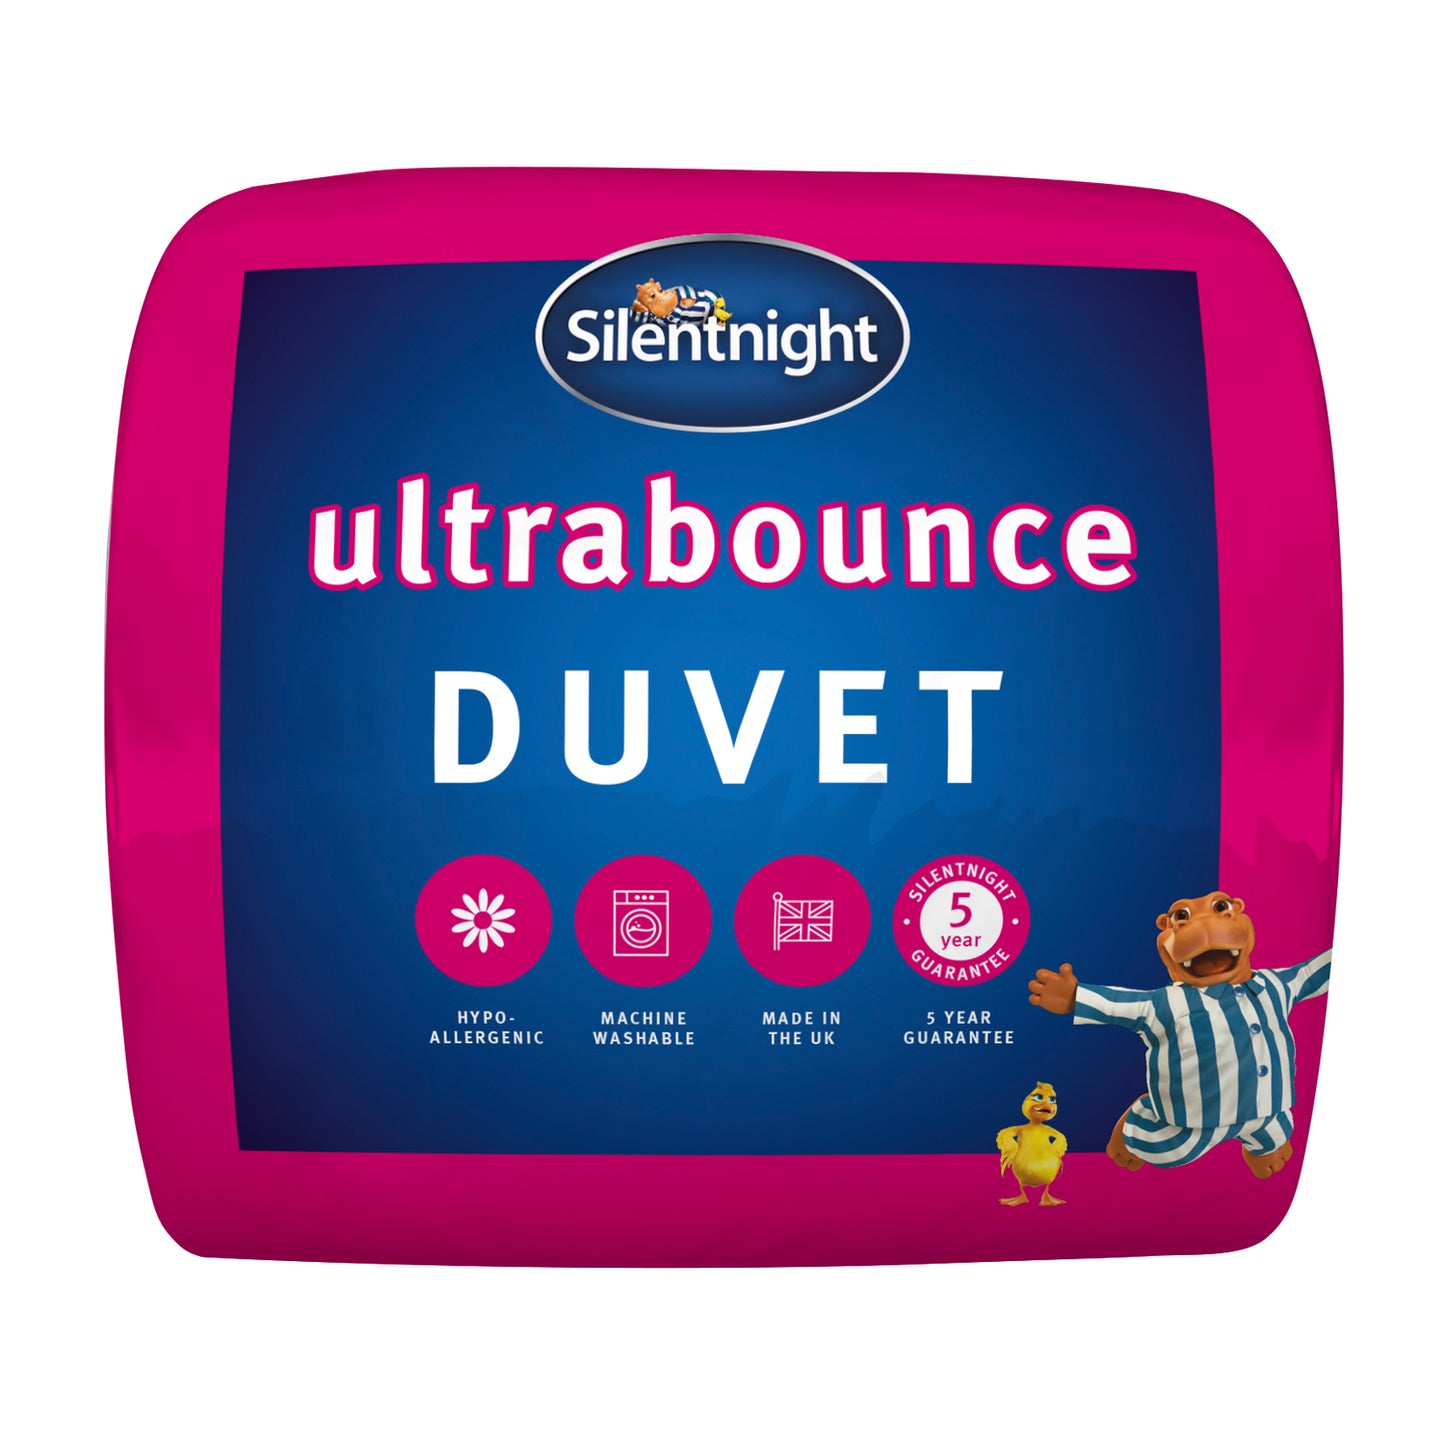 Silentnight Ultrabounce 10.5 Tog Duvet